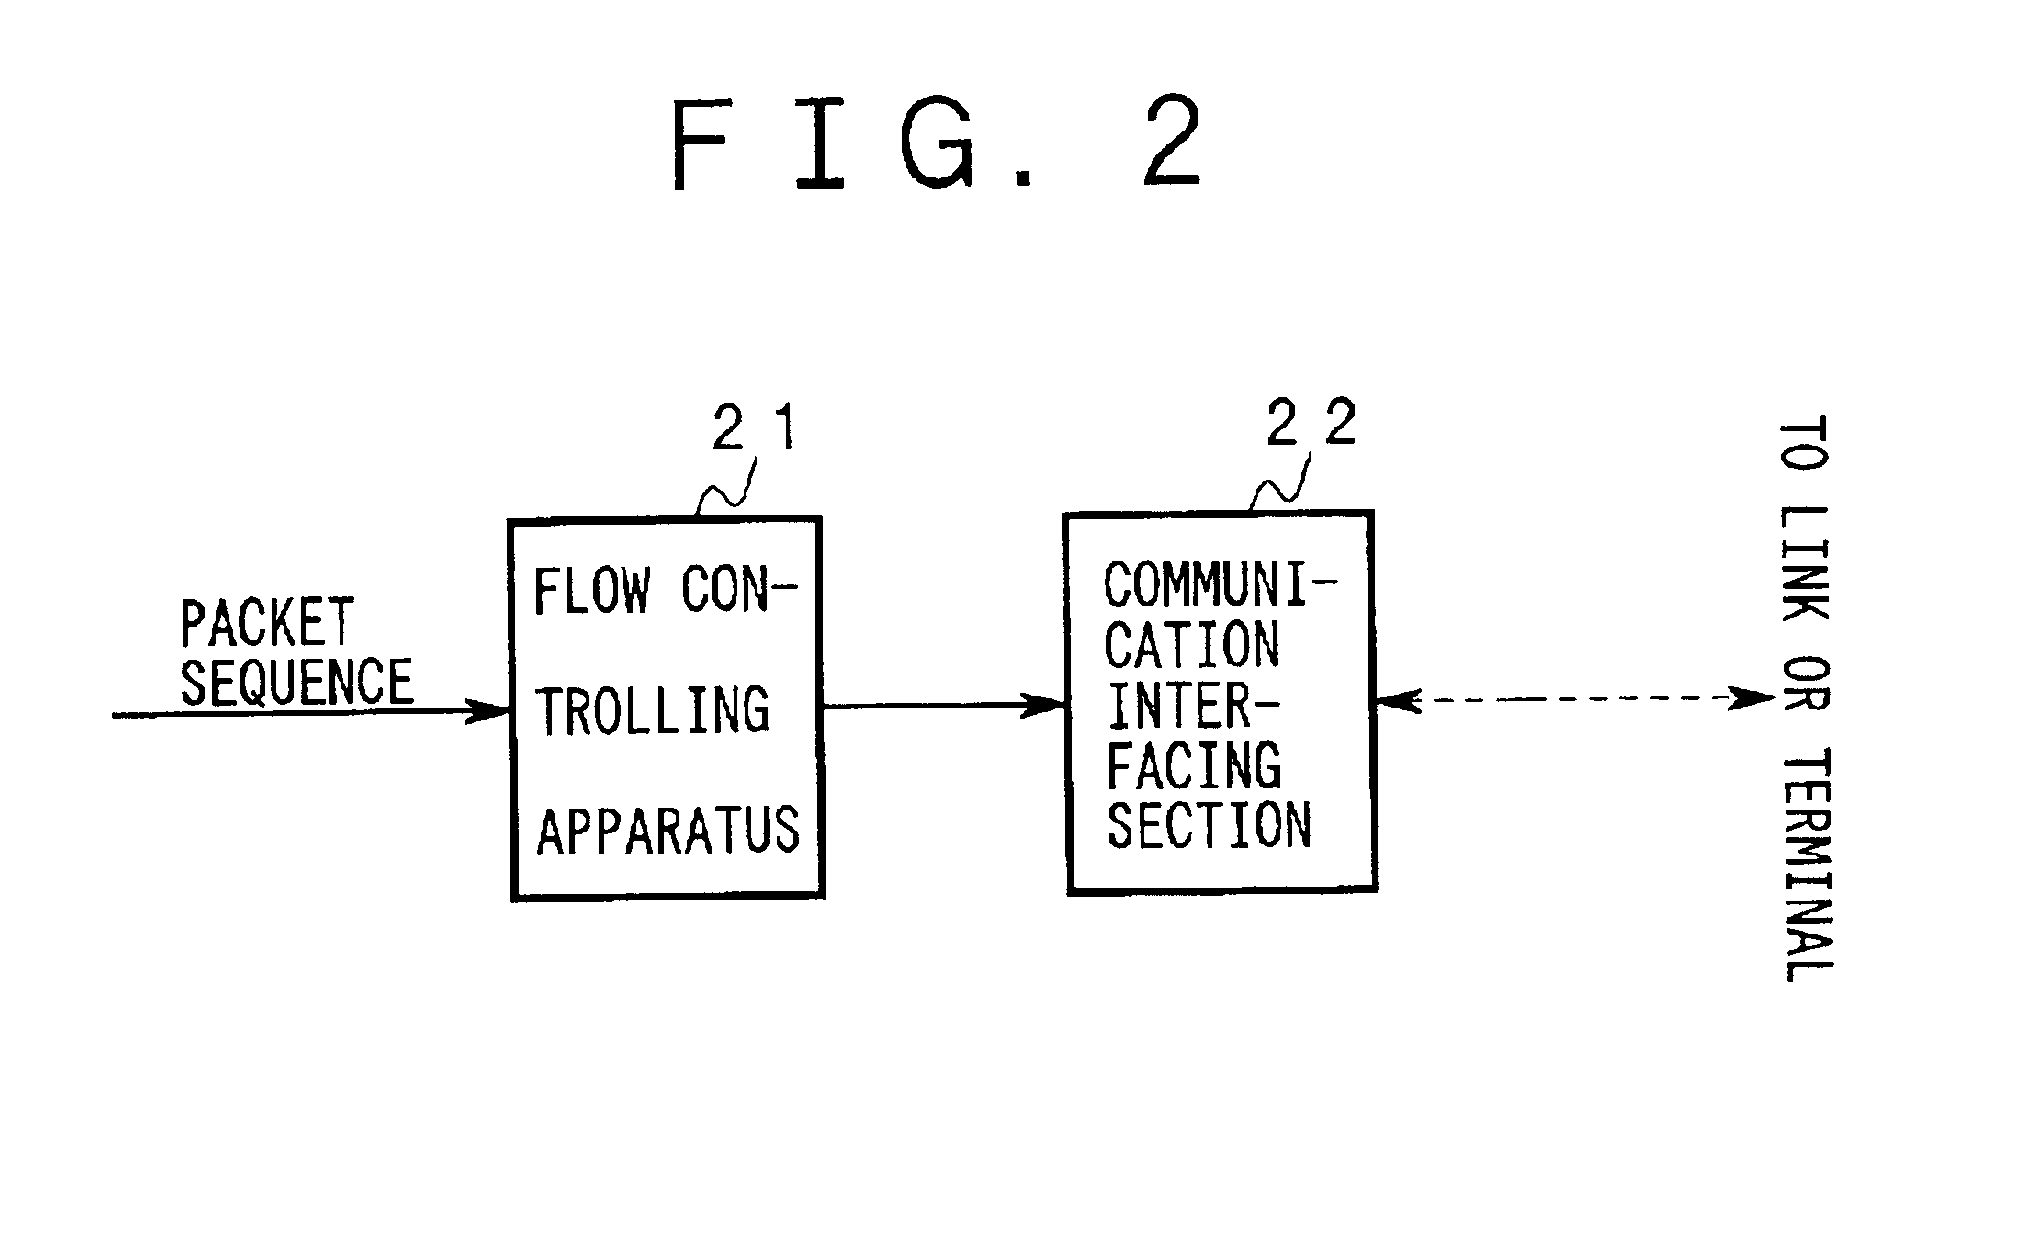 Flow controlling apparatus and node apparatus